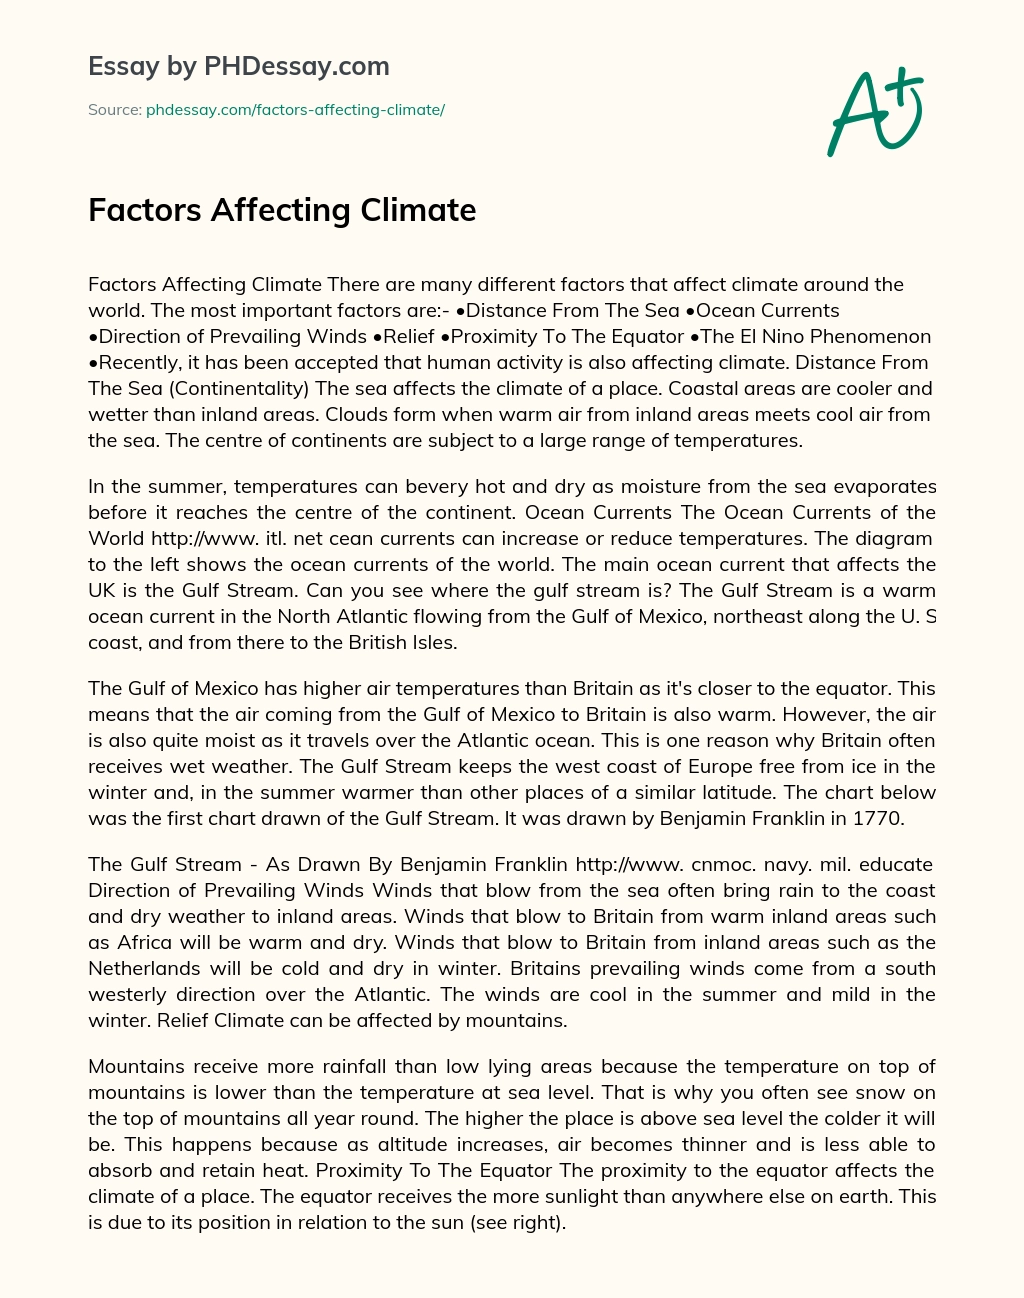 Factors Affecting Climate essay